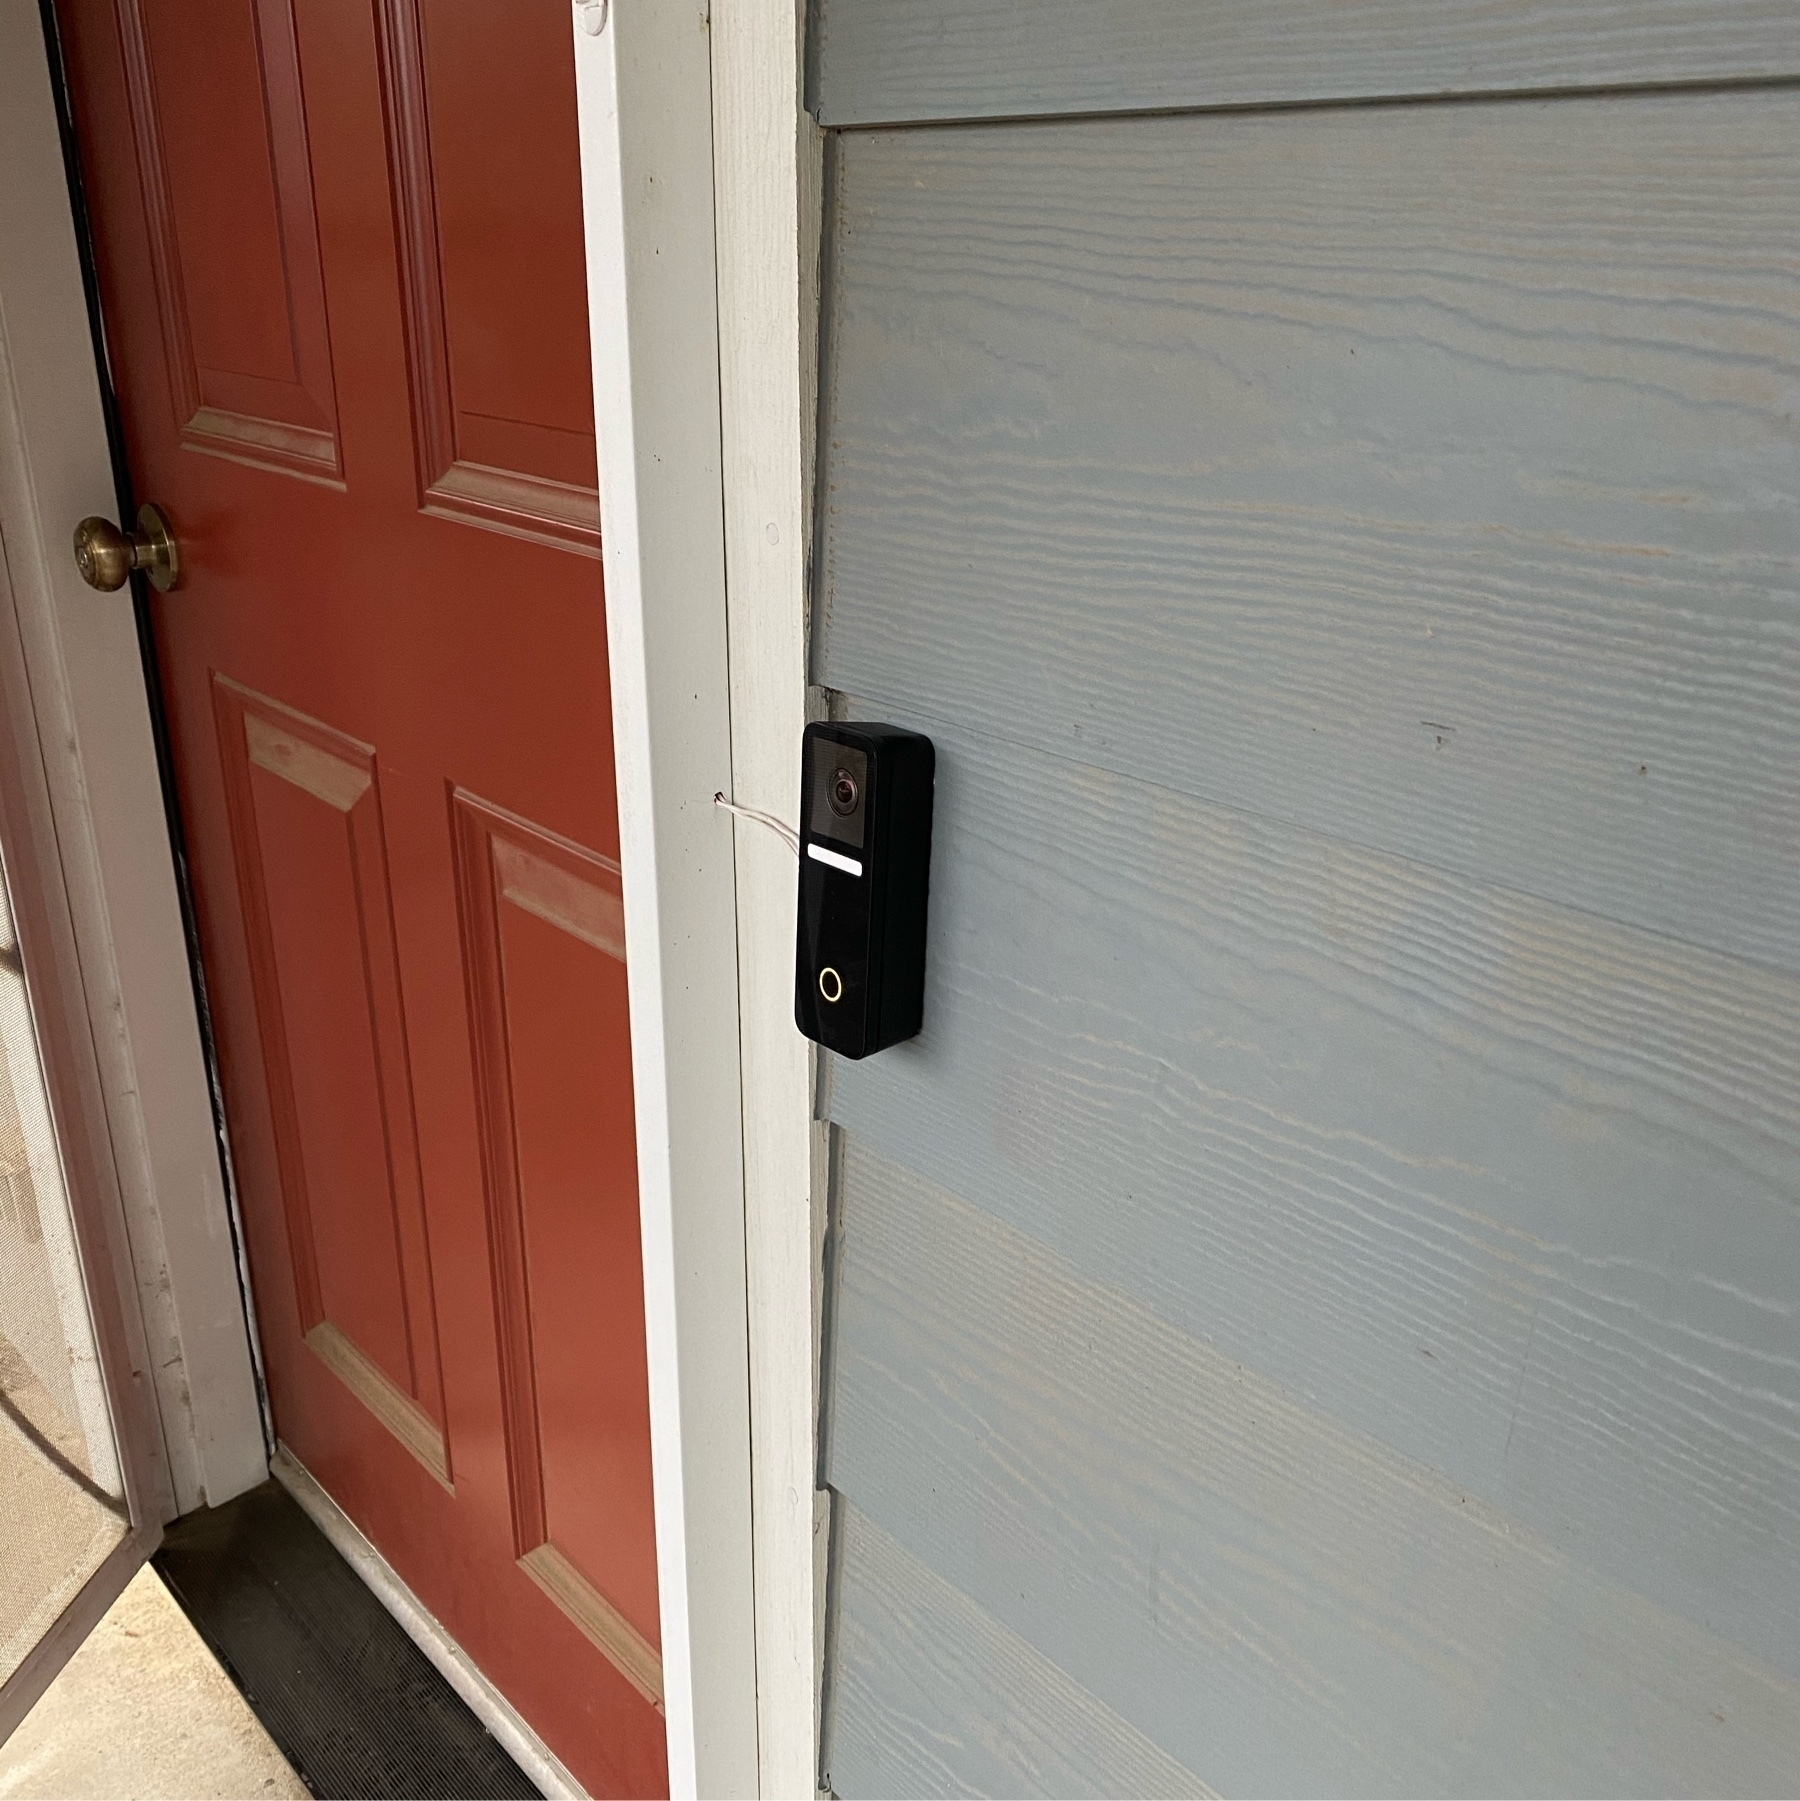 Logitech Circle View doorbell by a red front door